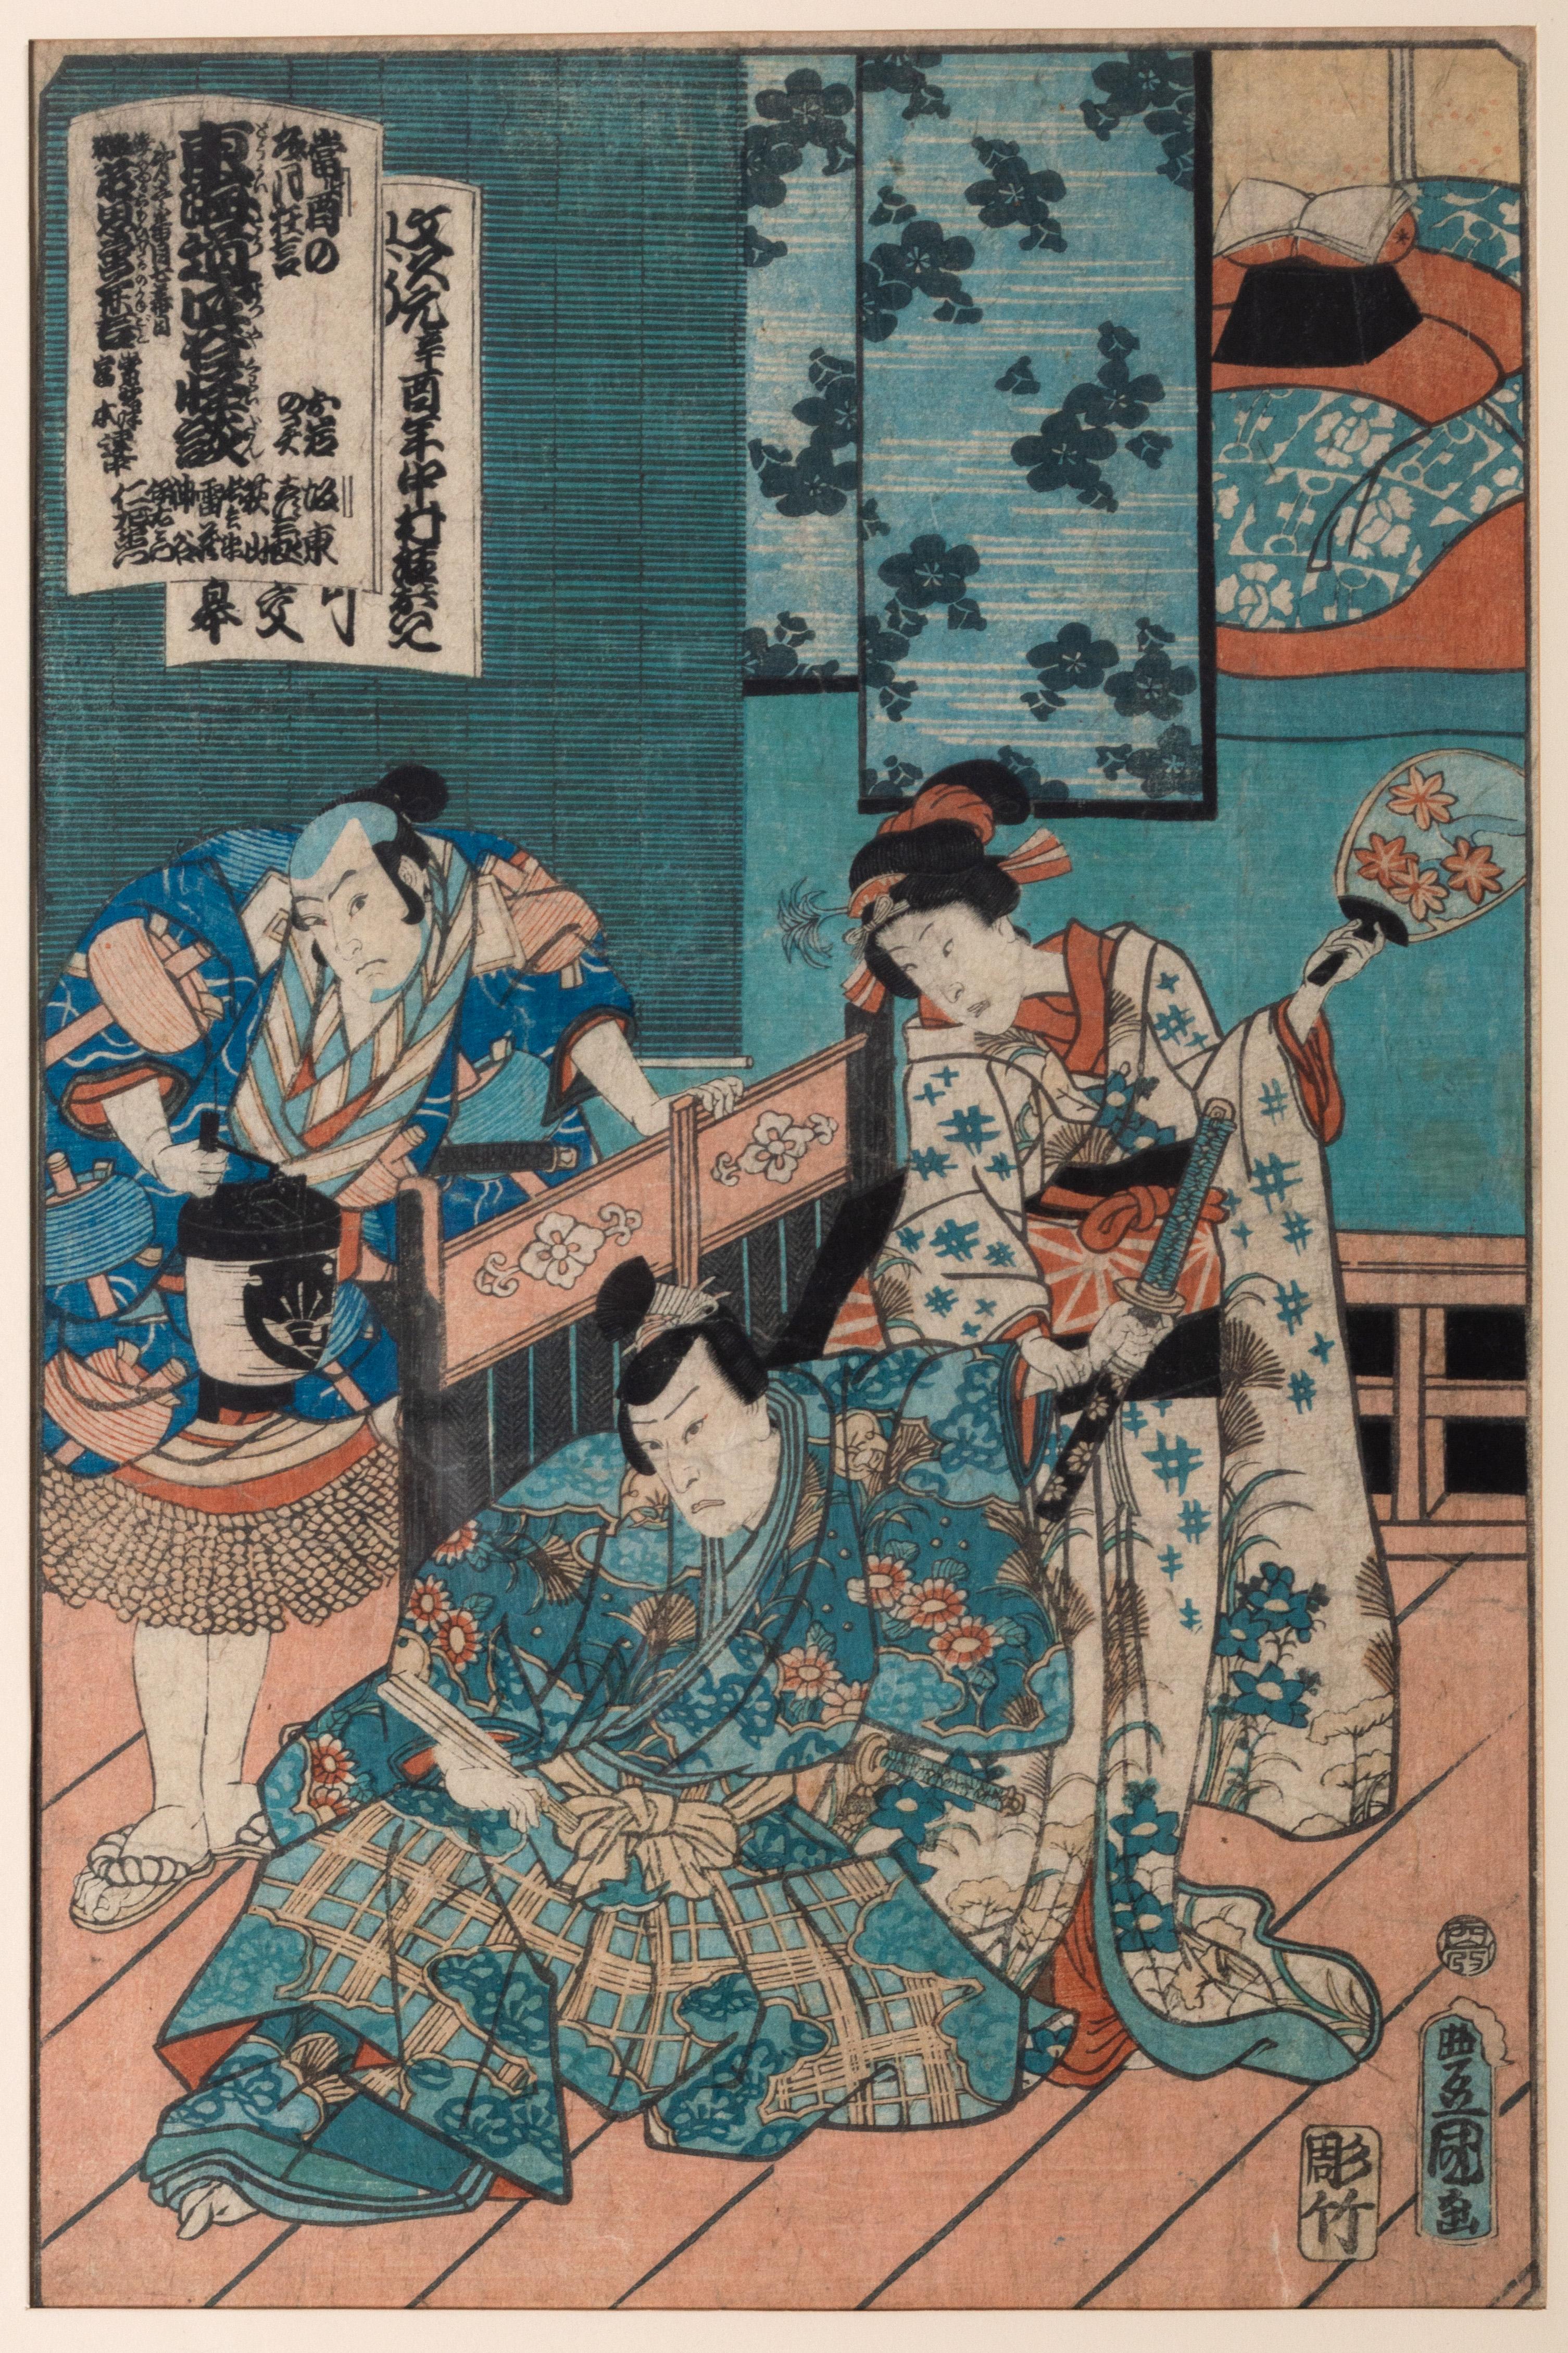 Japanese 19th Century Woodblock Print of Kabuki Actors Toyokuni III 

Original Woodcut by Toyokuni III (1786 - 1864)
Of the Kabuki actors Bando Hikosaburo and Nizaemon 
Published in 1861

Glazed and Framed
Presented in very good condition.

